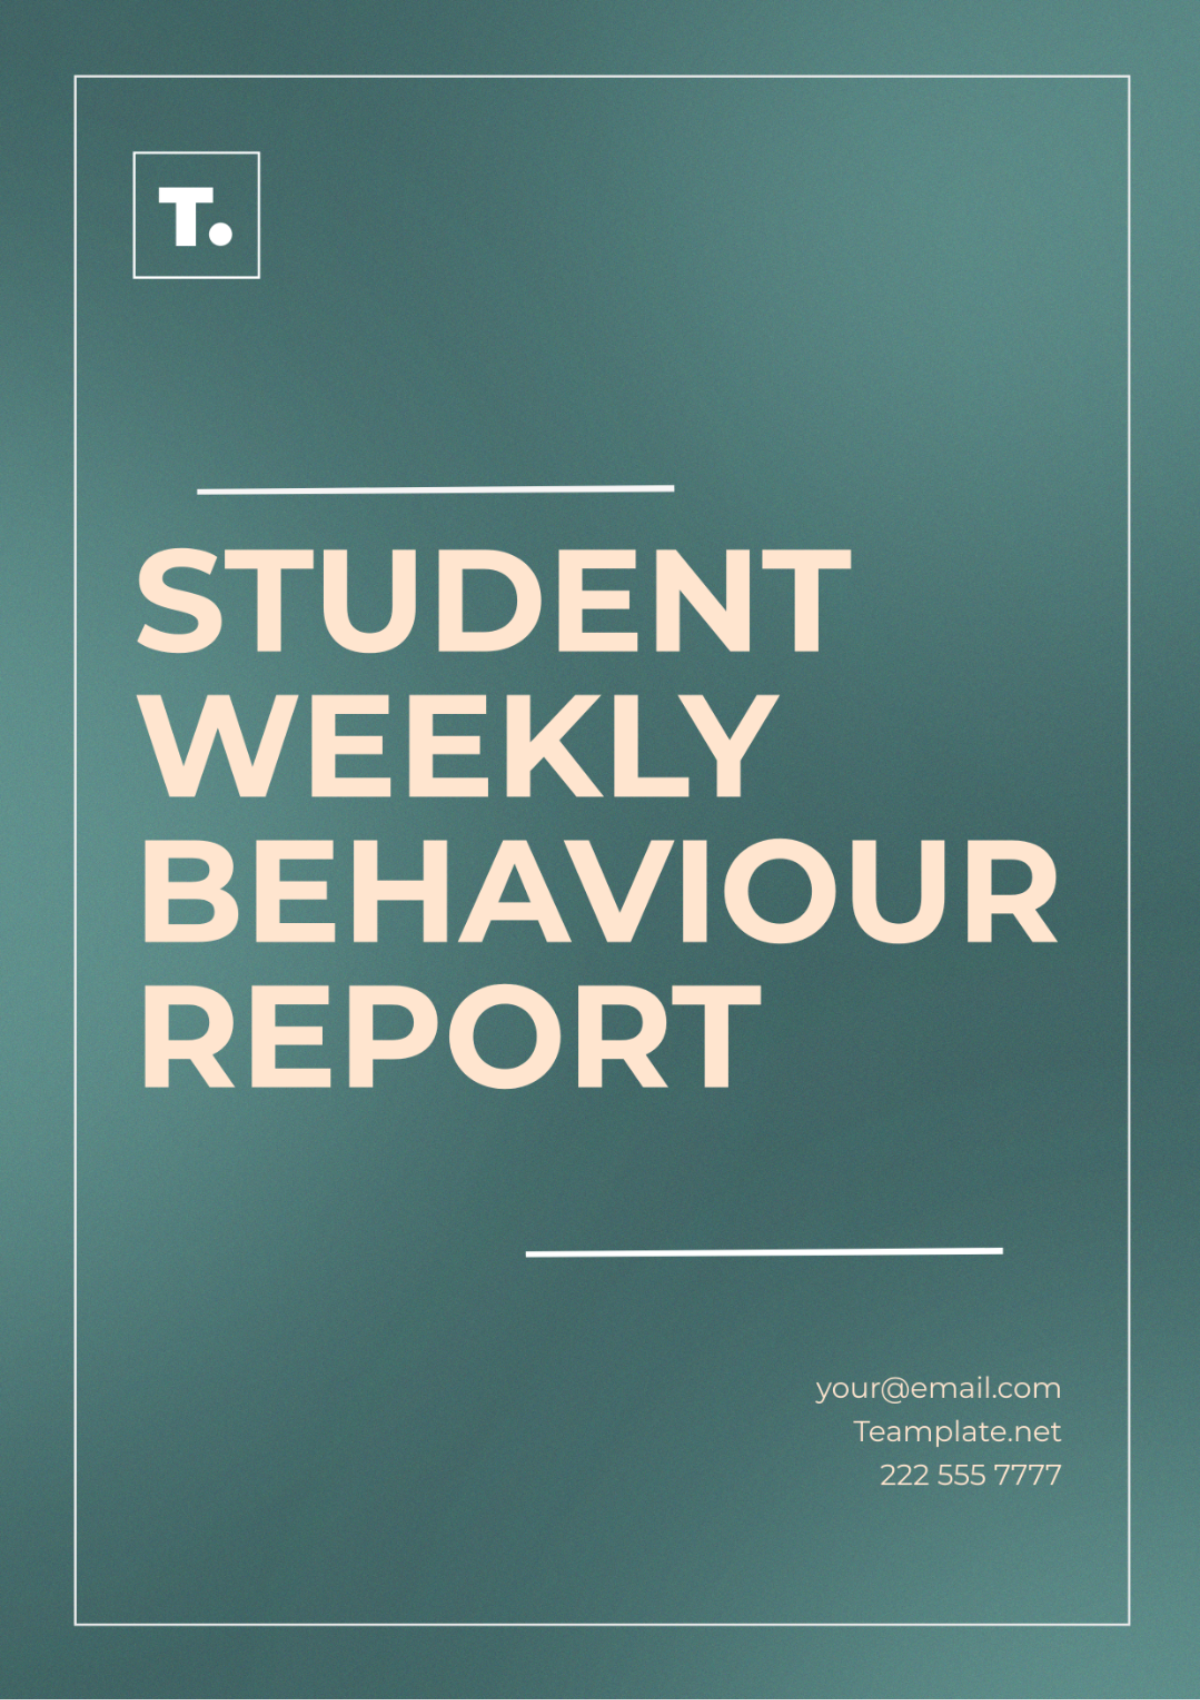 Student Weekly Behaviour Report Template